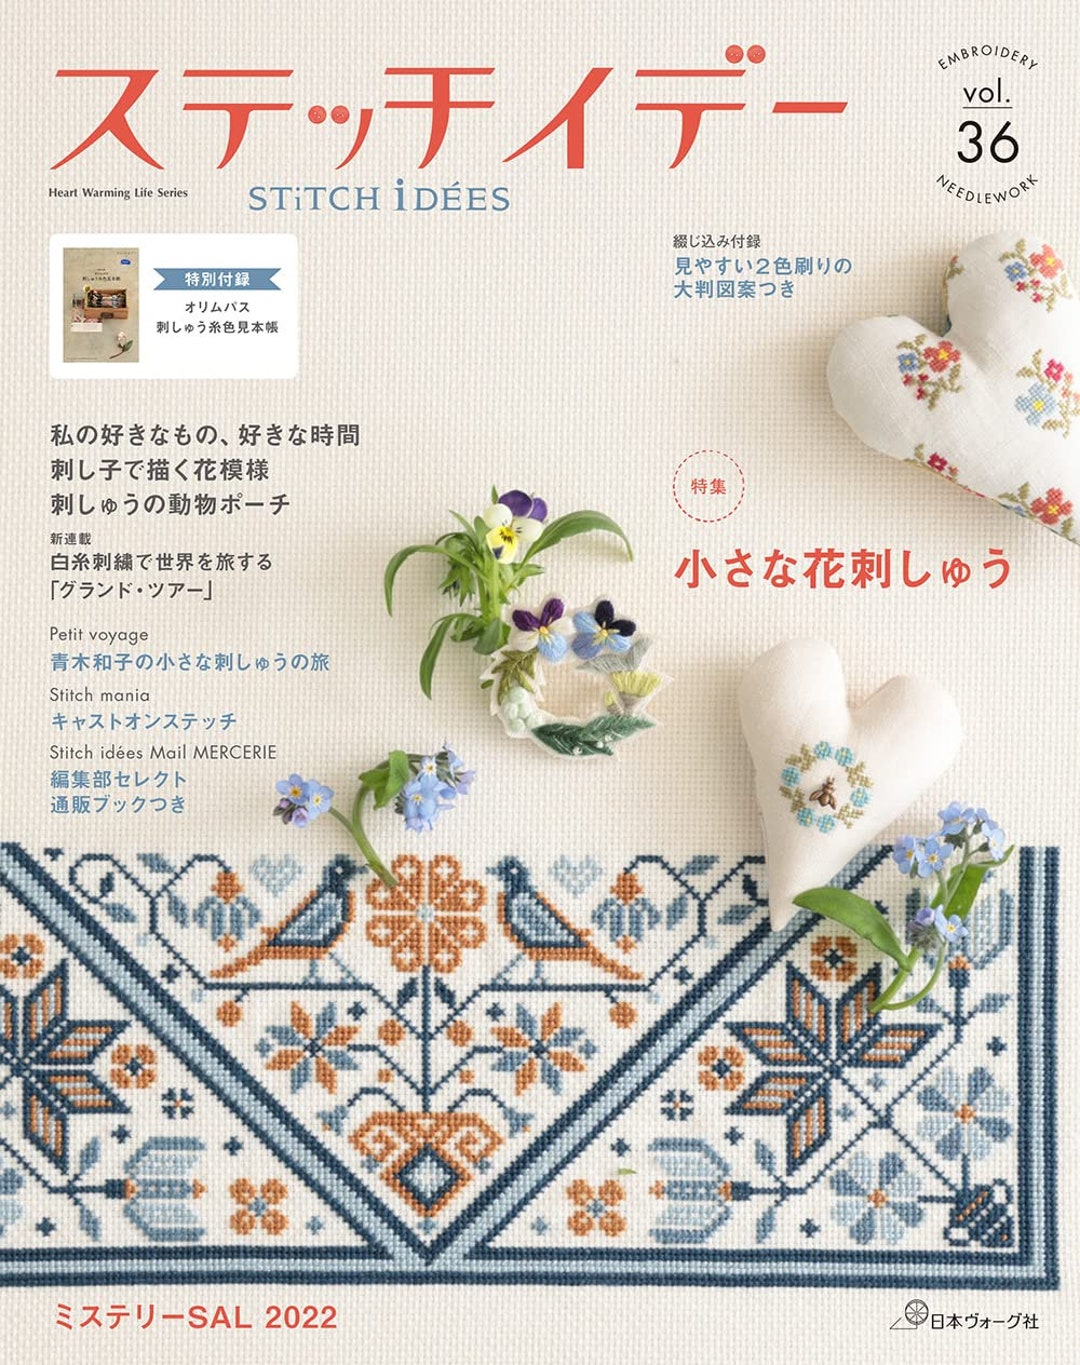 Jan 22  Creativebug Presents: Japanese Side Sewn Sketchbook